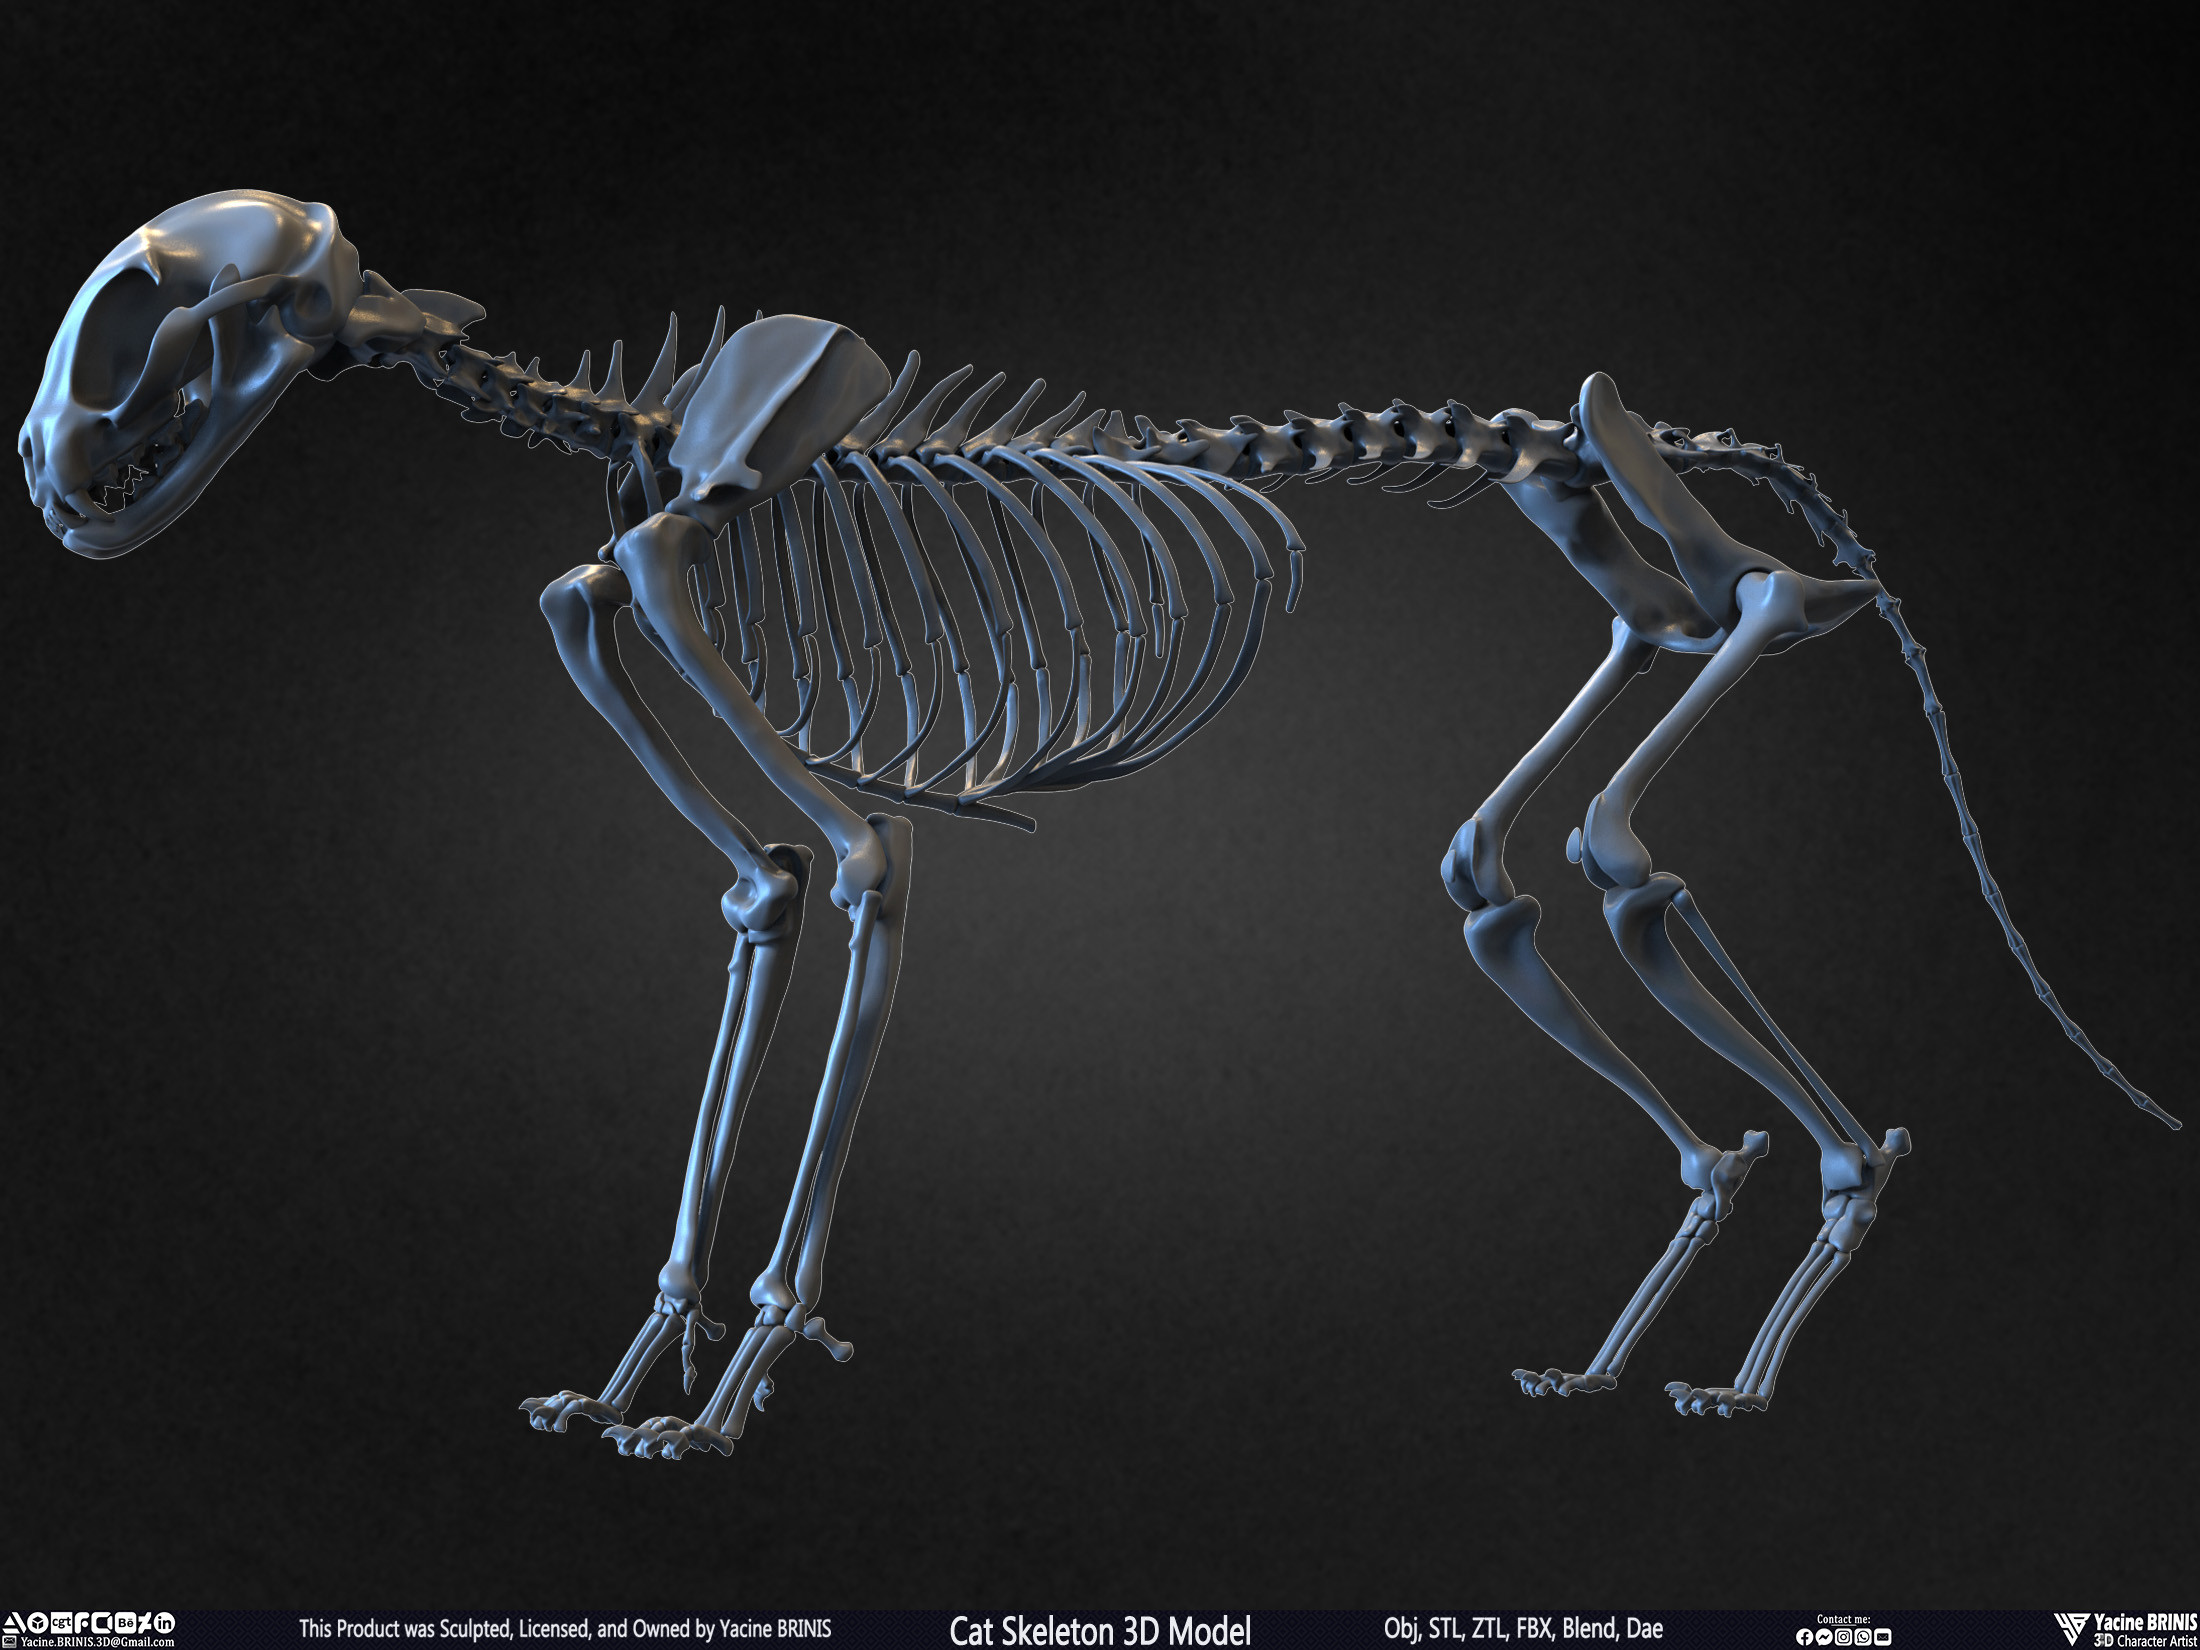 Highly Detailed Cat Skeleton 3D Model Sculpted by Yacine BRINIS Set 011